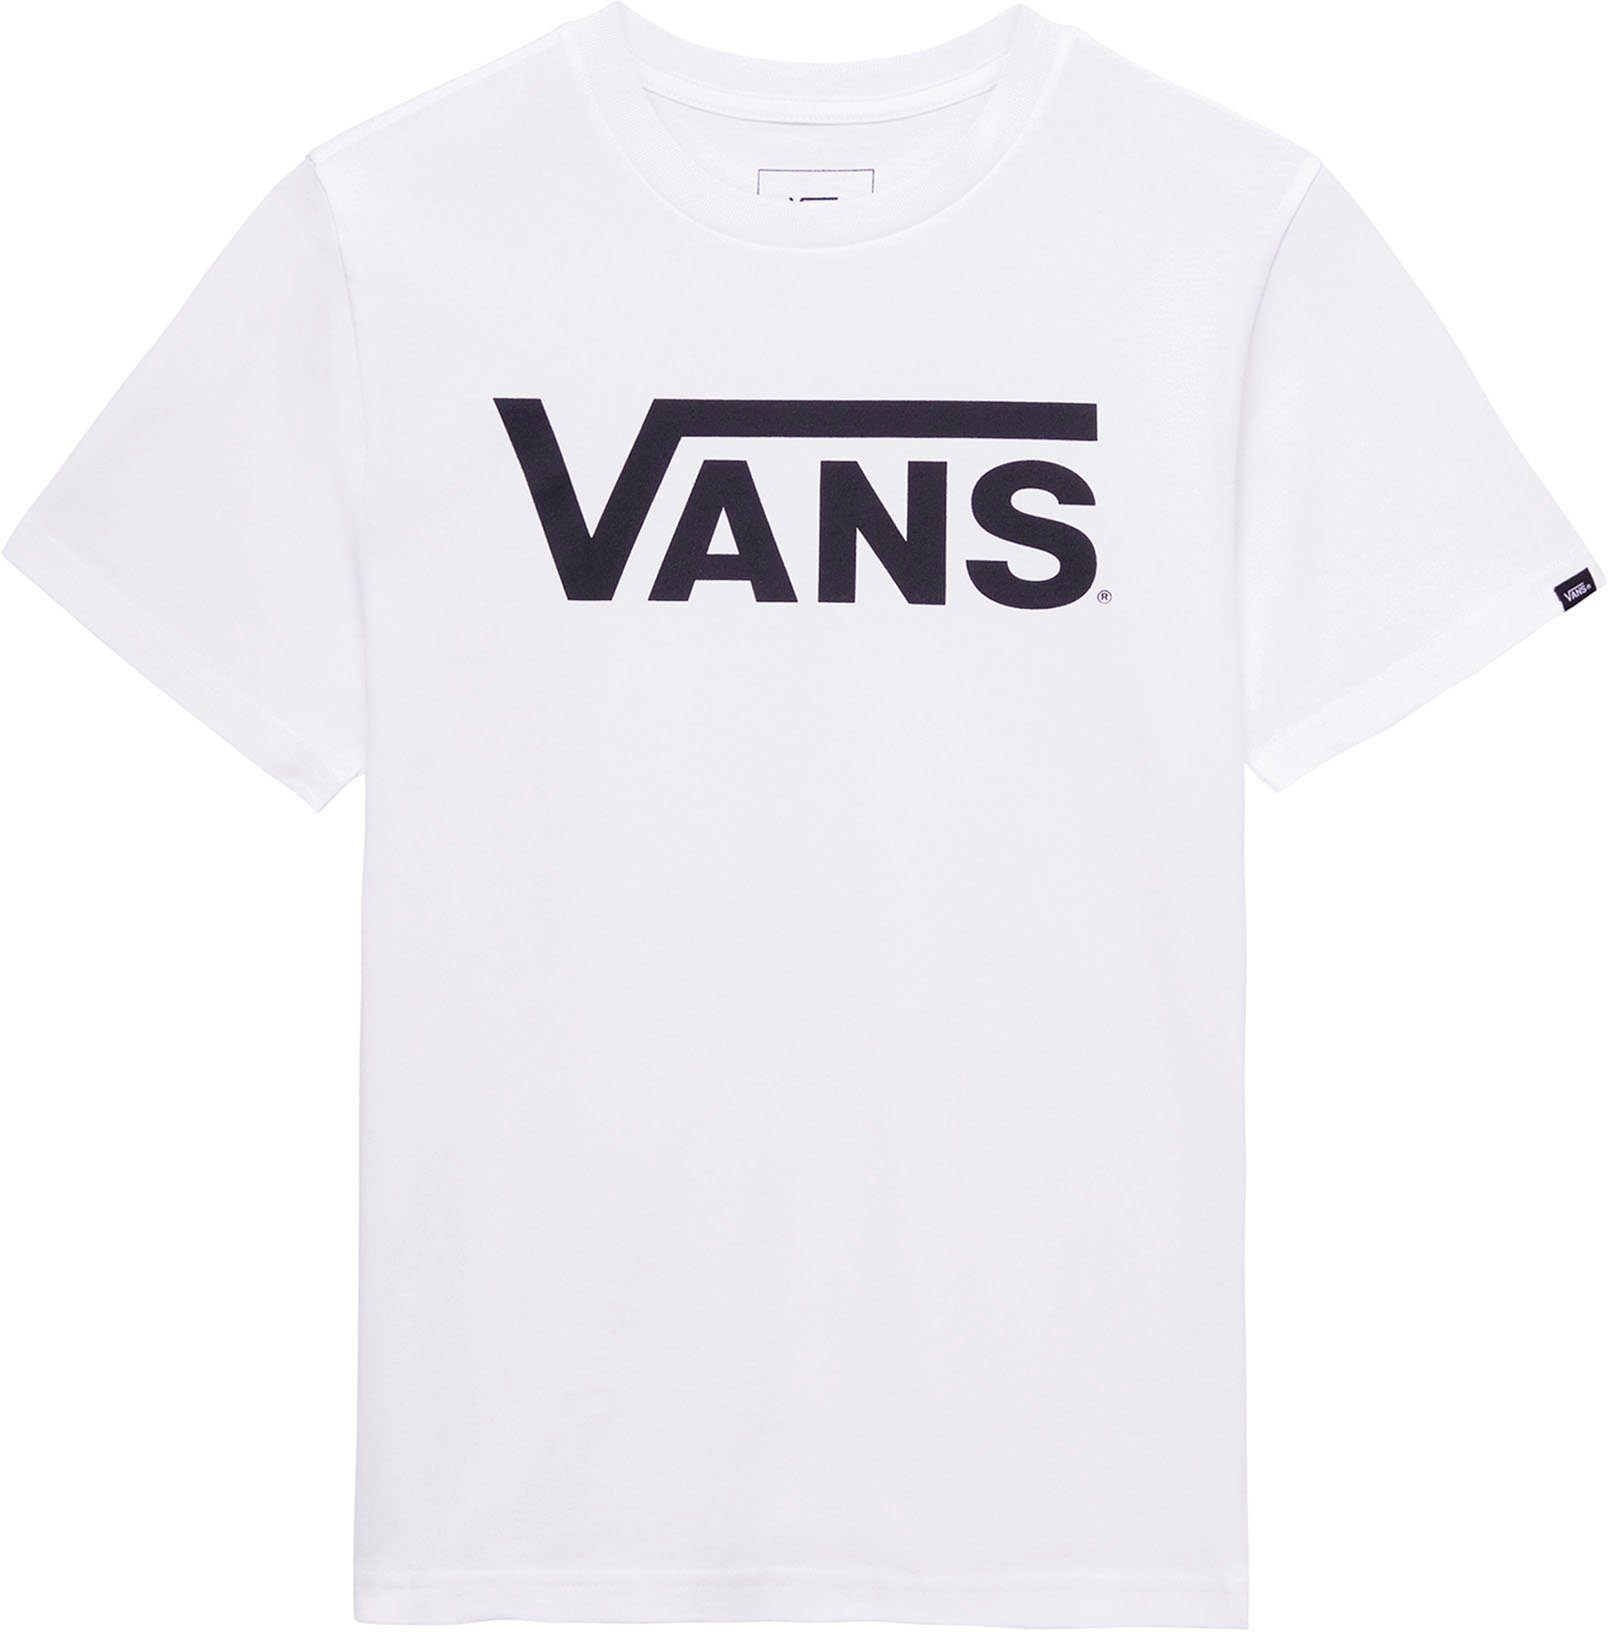 Vans T-Shirt VANS CLASSIC weiß BOYS